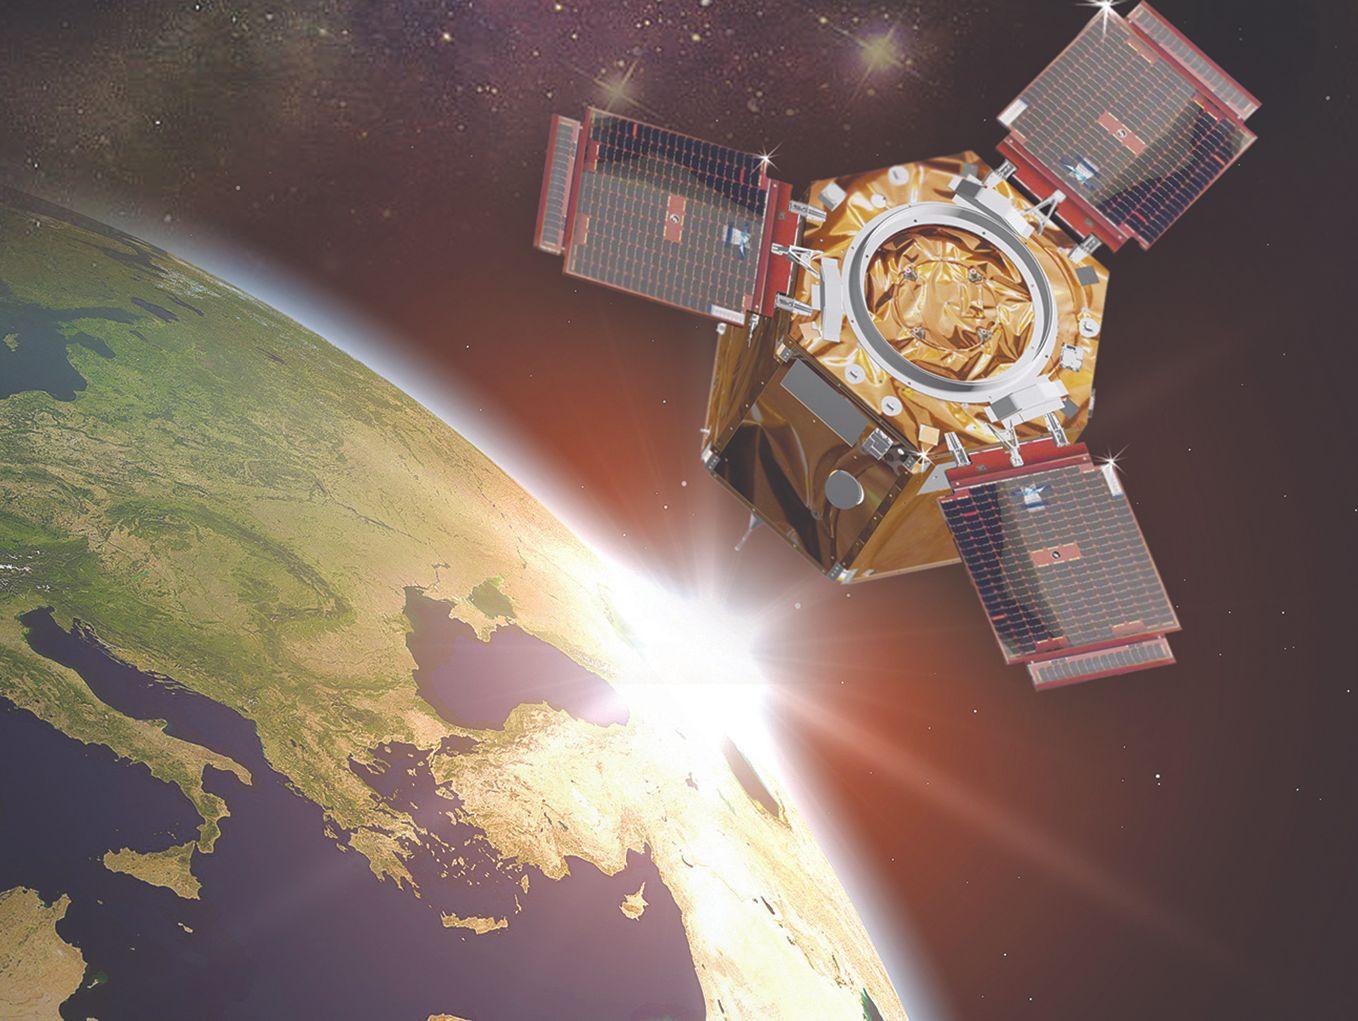 Israel launches new satellite into orbit